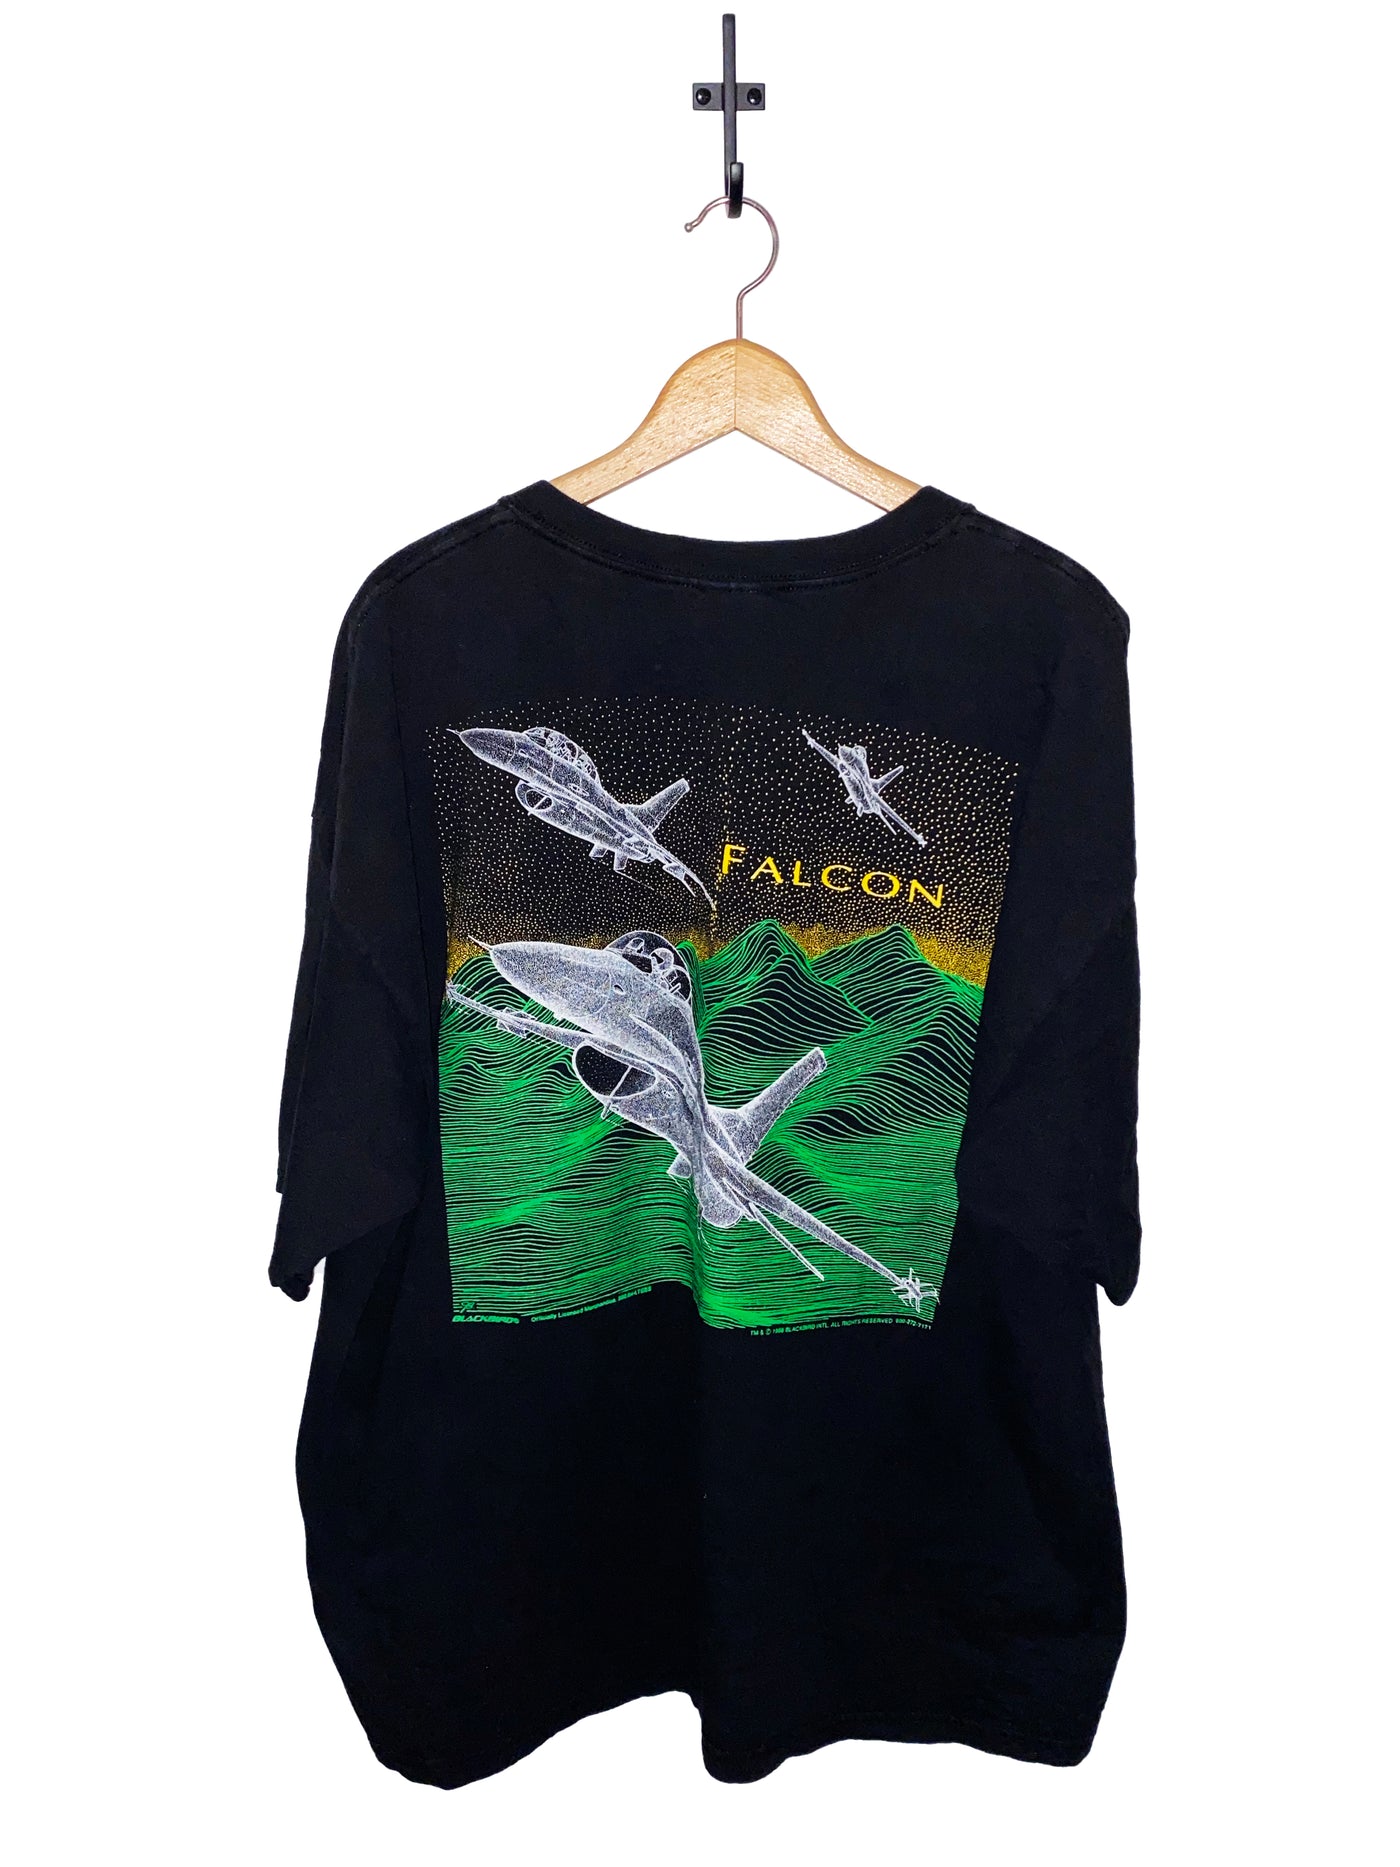 Vintage 1988 Falcon F16 T-Shirt